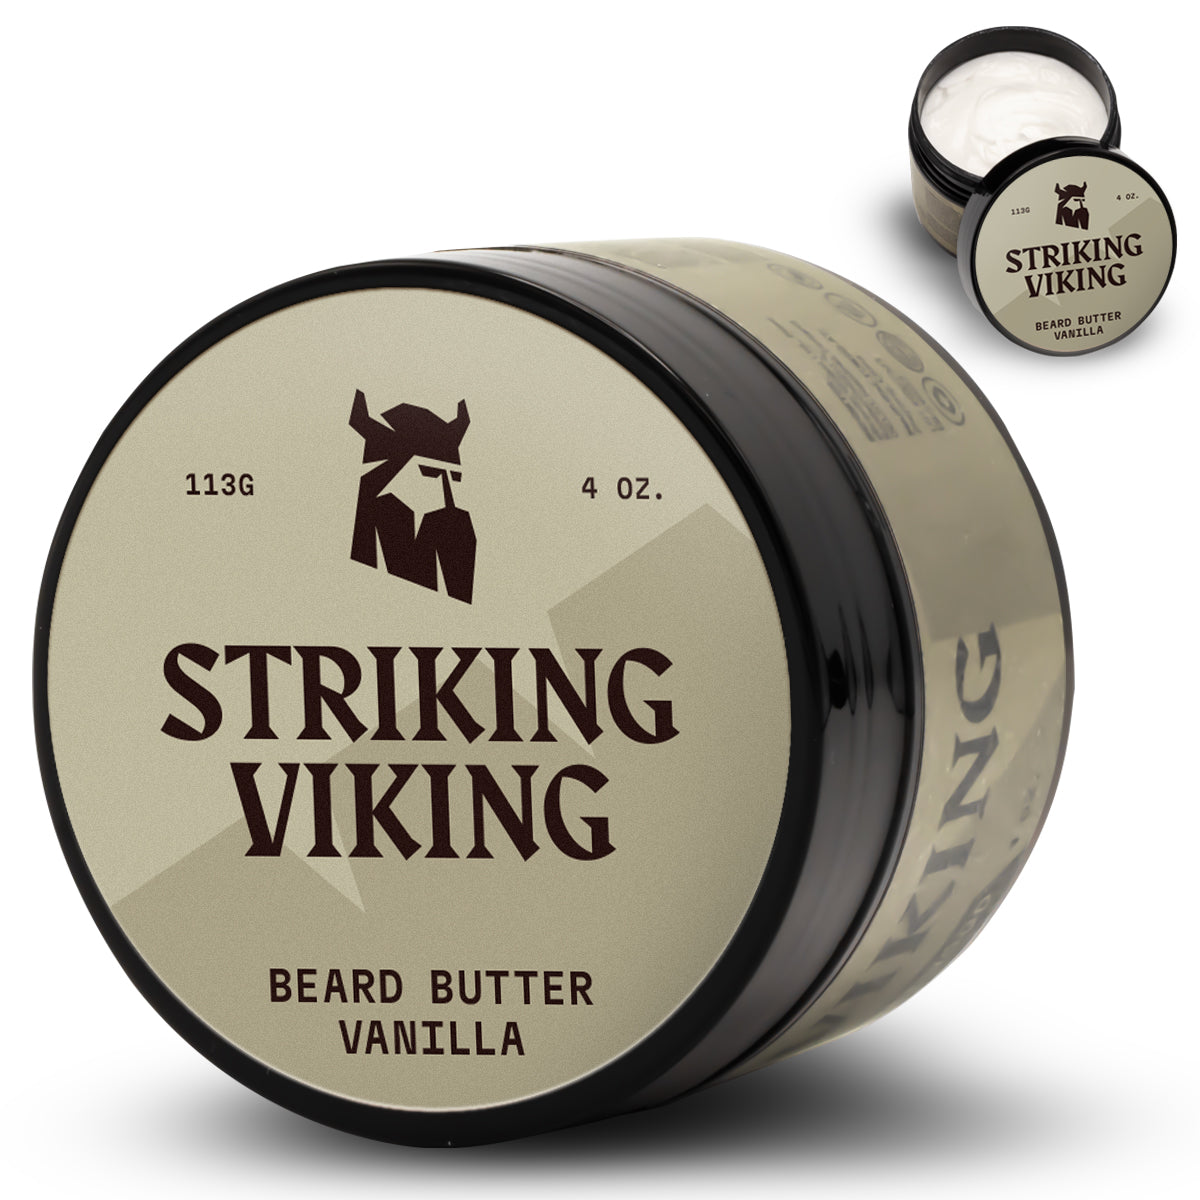 beard-butter-vanilla-main-image-01.jpg